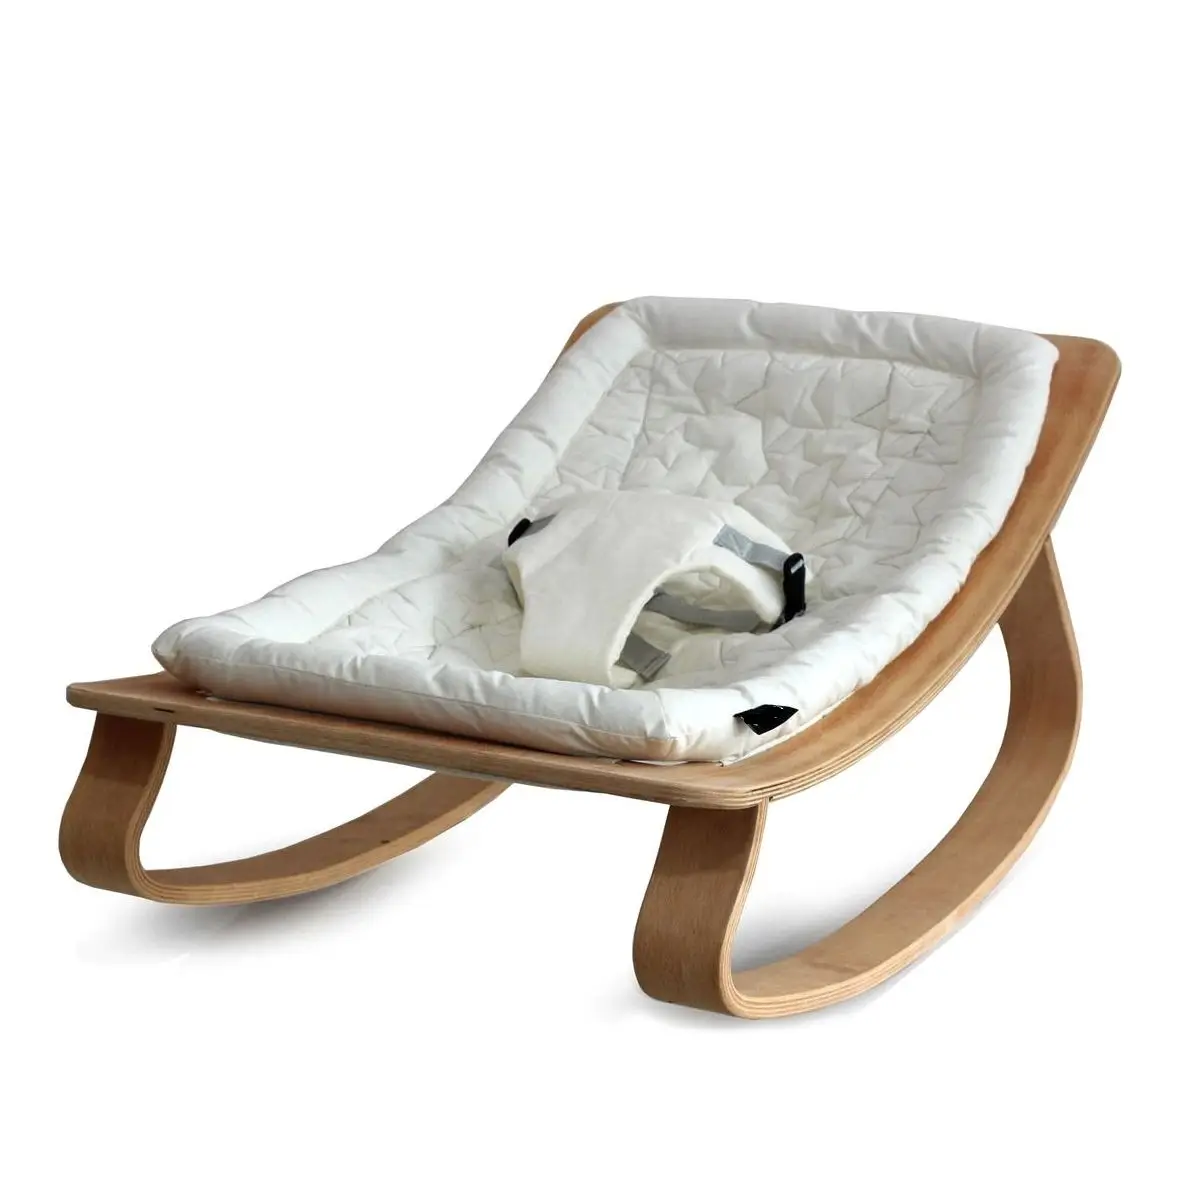 Portable baby crib child bed rocking chair Bassinet swing Mini hammock Basket side furniture tool Sleep From Turkey